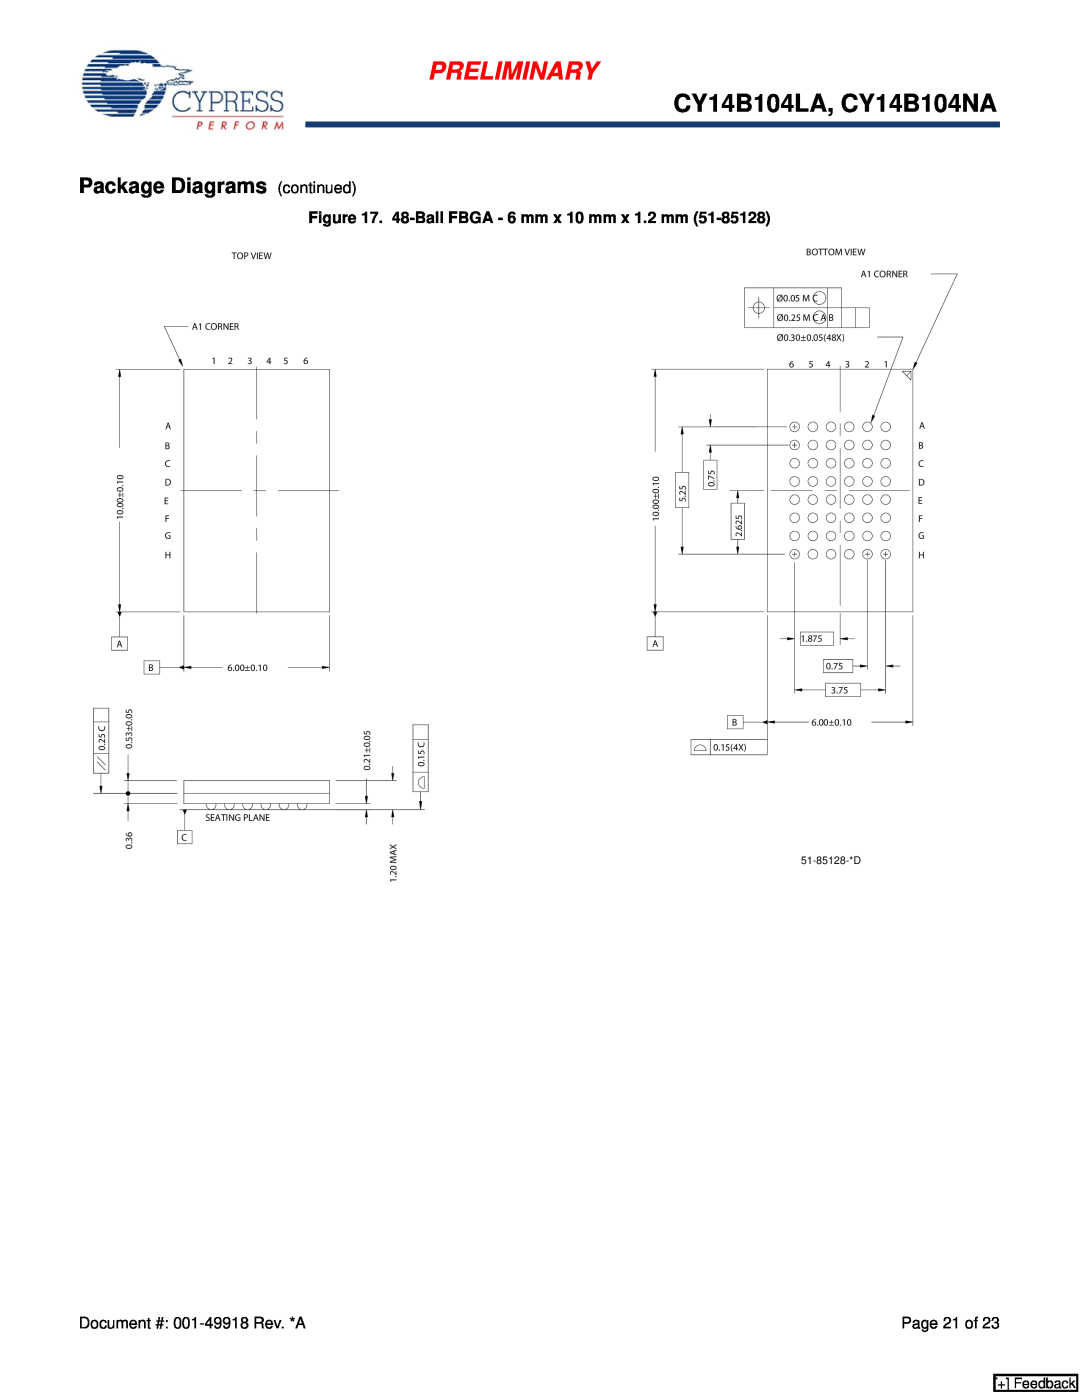 Cypress manual Package Diagrams continued, Preliminary, CY14B104LA, CY14B104NA, 48-Ball FBGA - 6 mm x 10 mm x 1.2 mm 